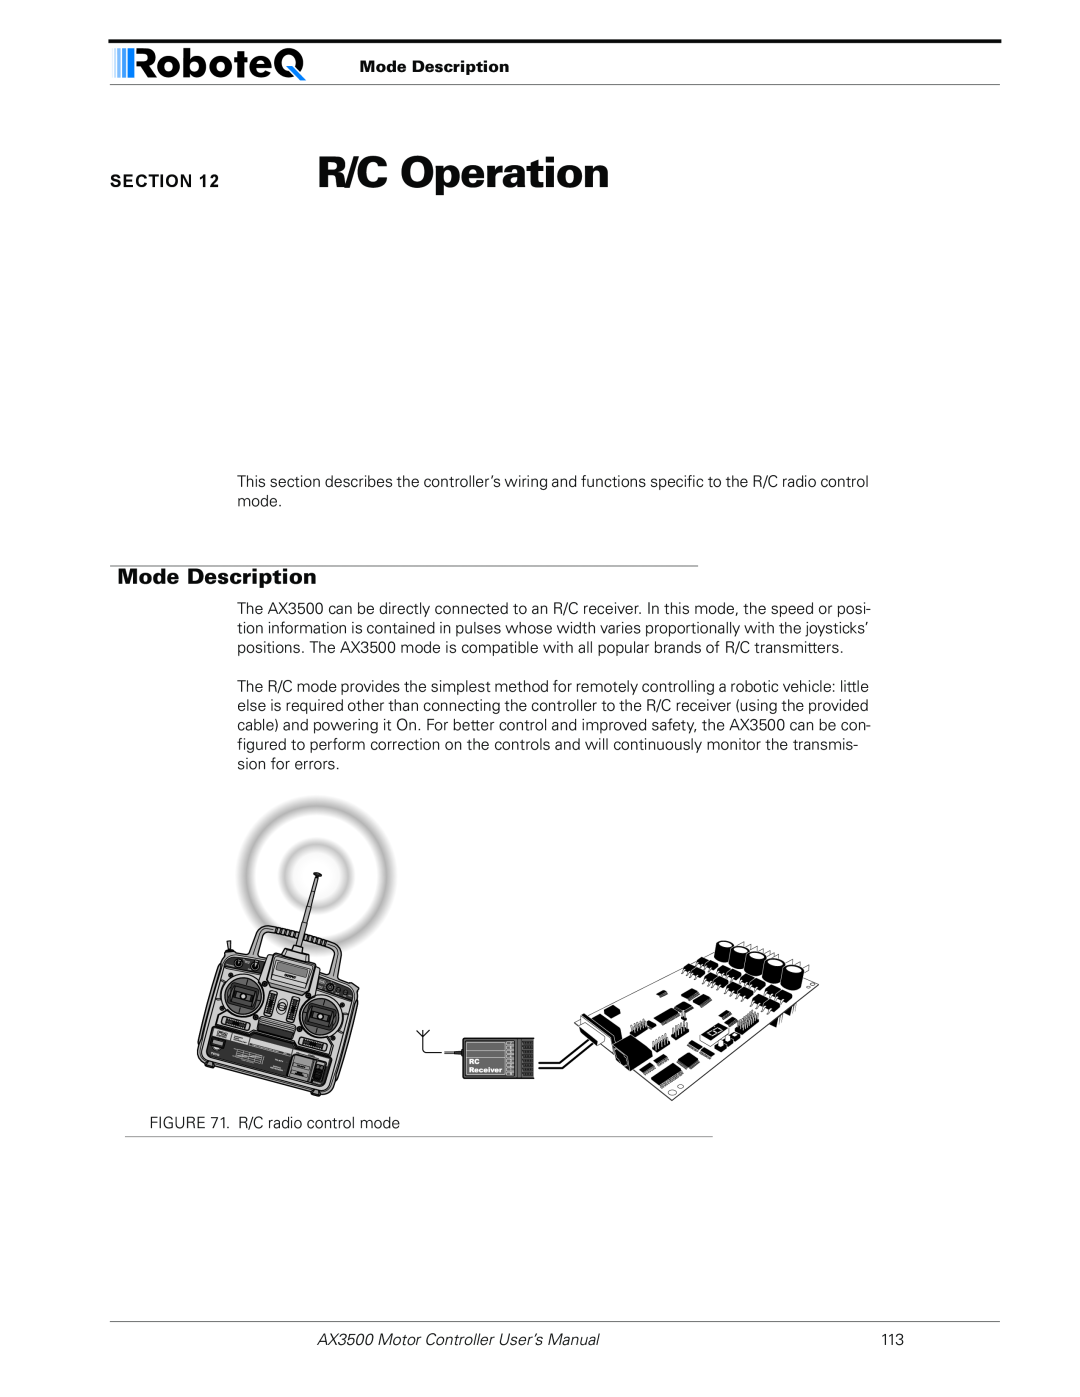 RoboteQ user manual R/C Operation, Mode Description, AX3500 Motor Controller User’s Manual 